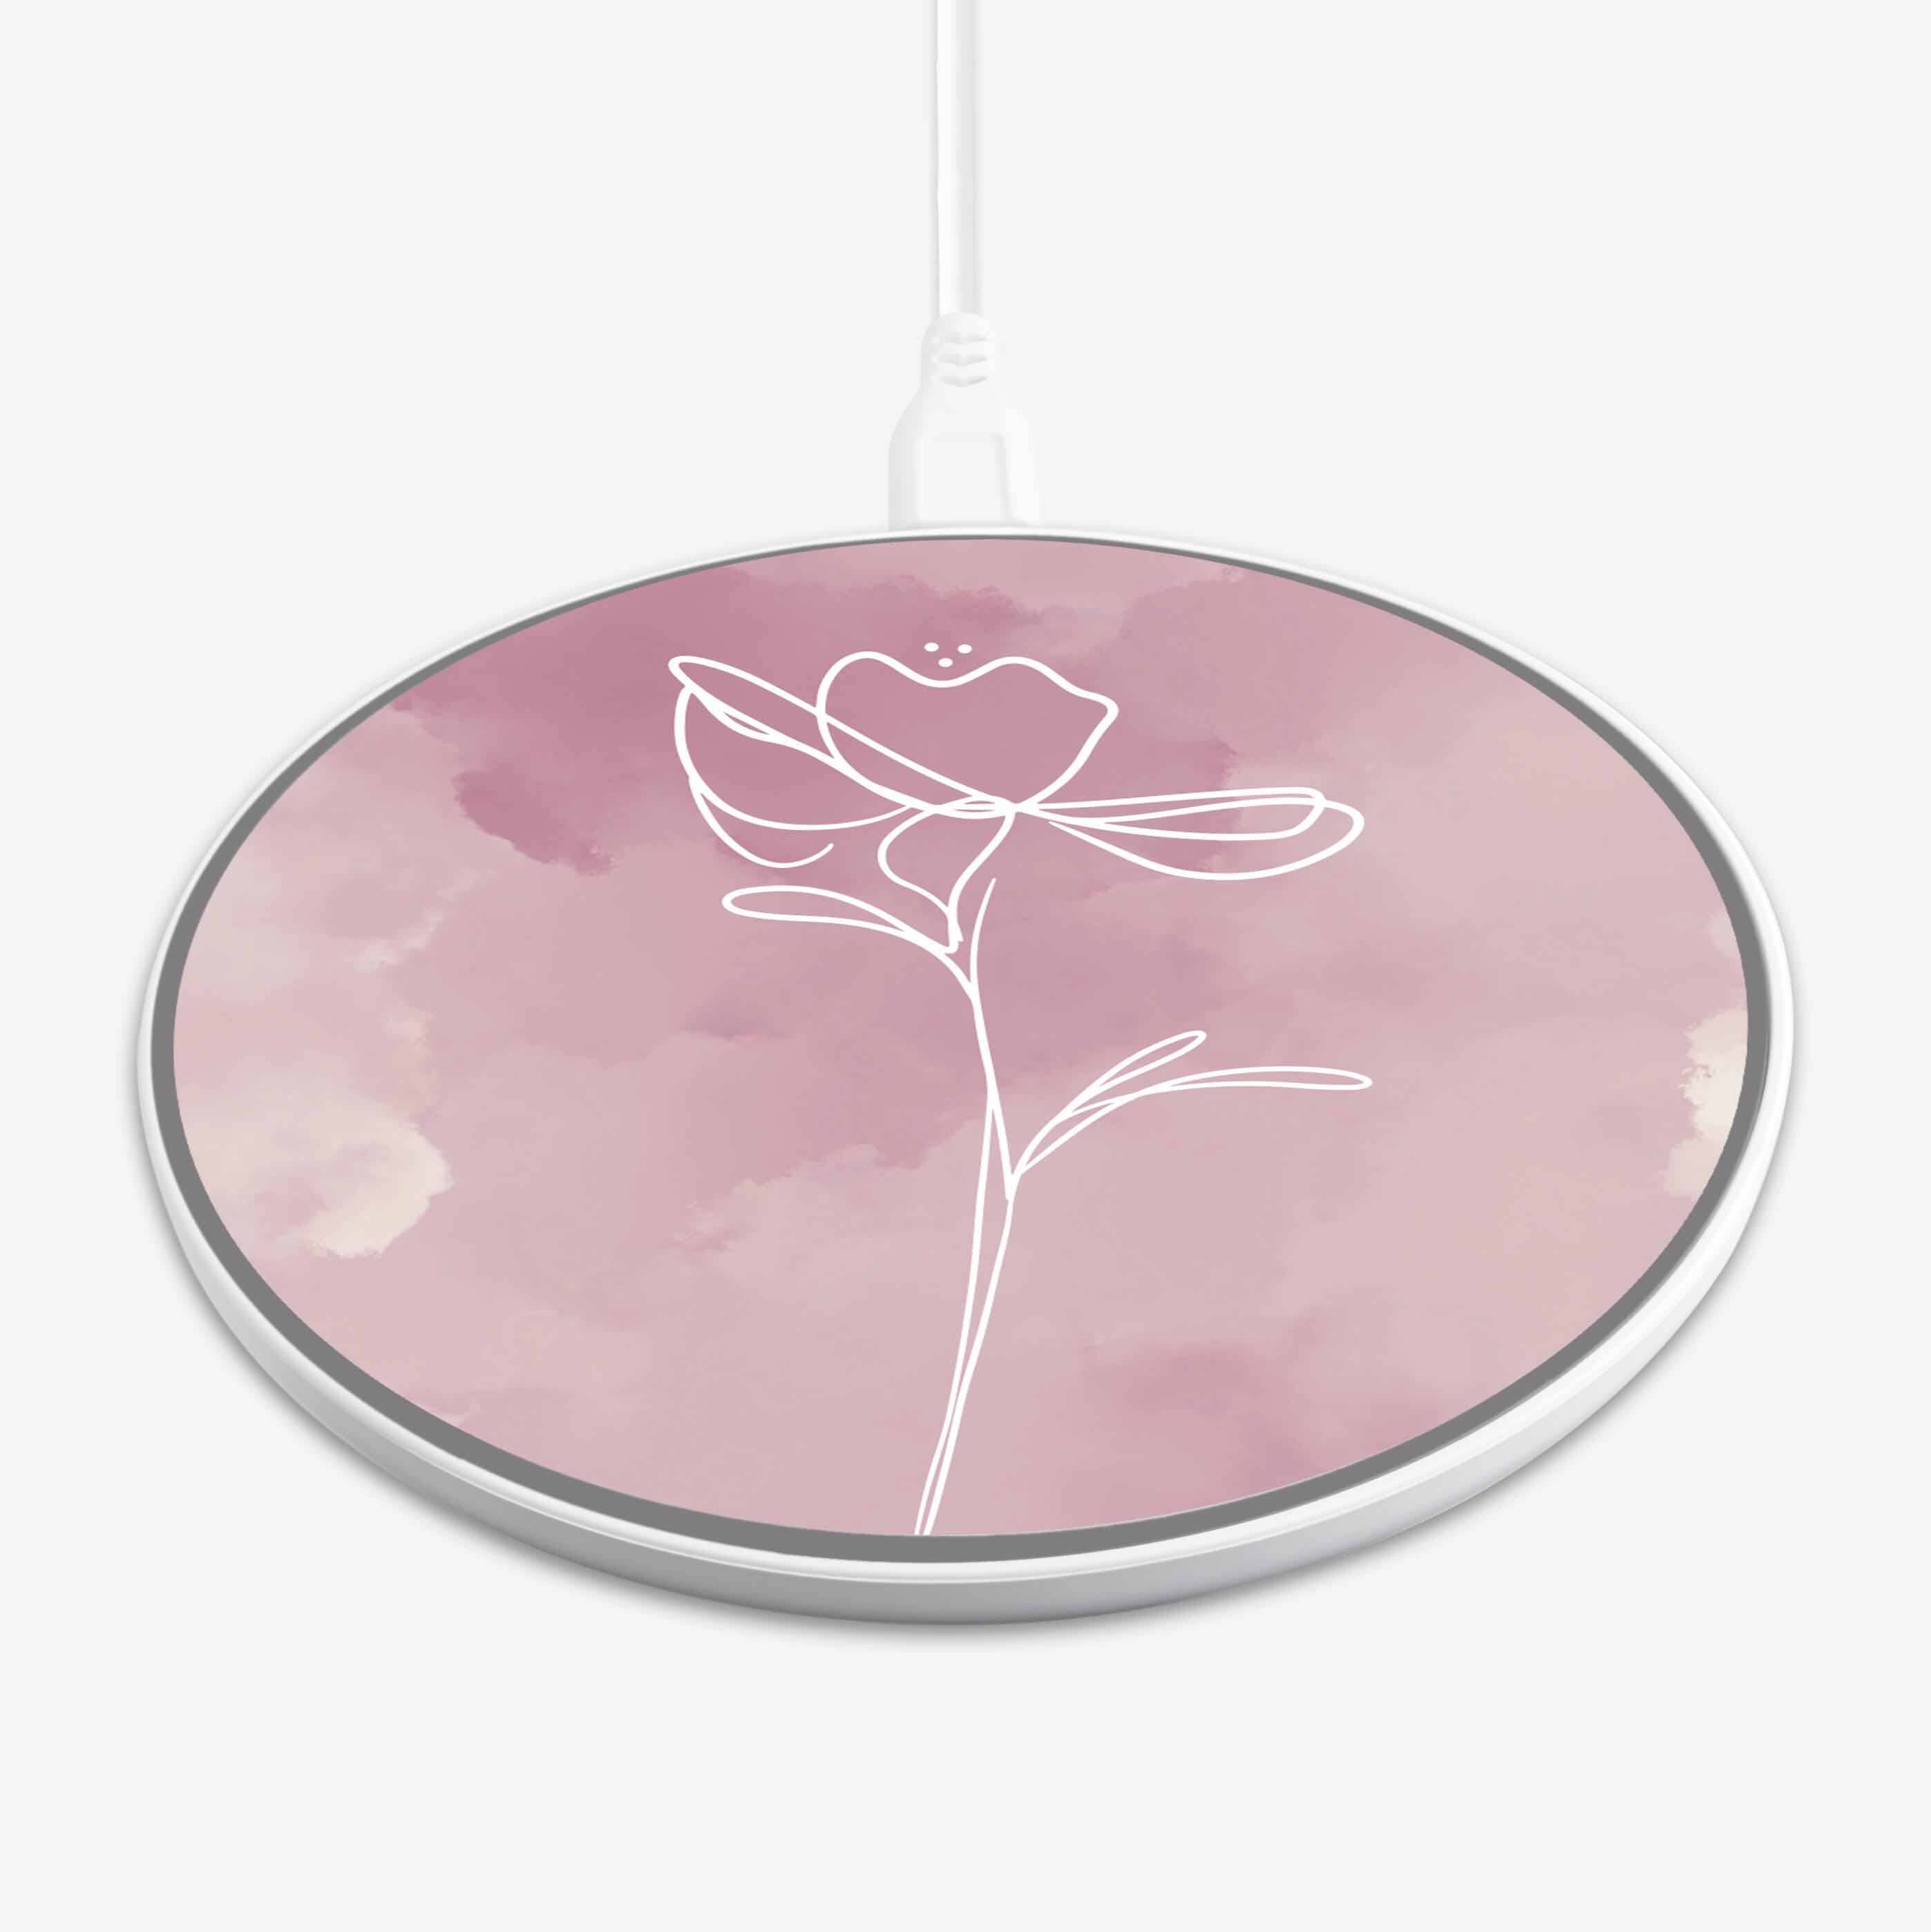 Wireless Charging Pad - Blush Pink Day Break Flower Design (Front View)